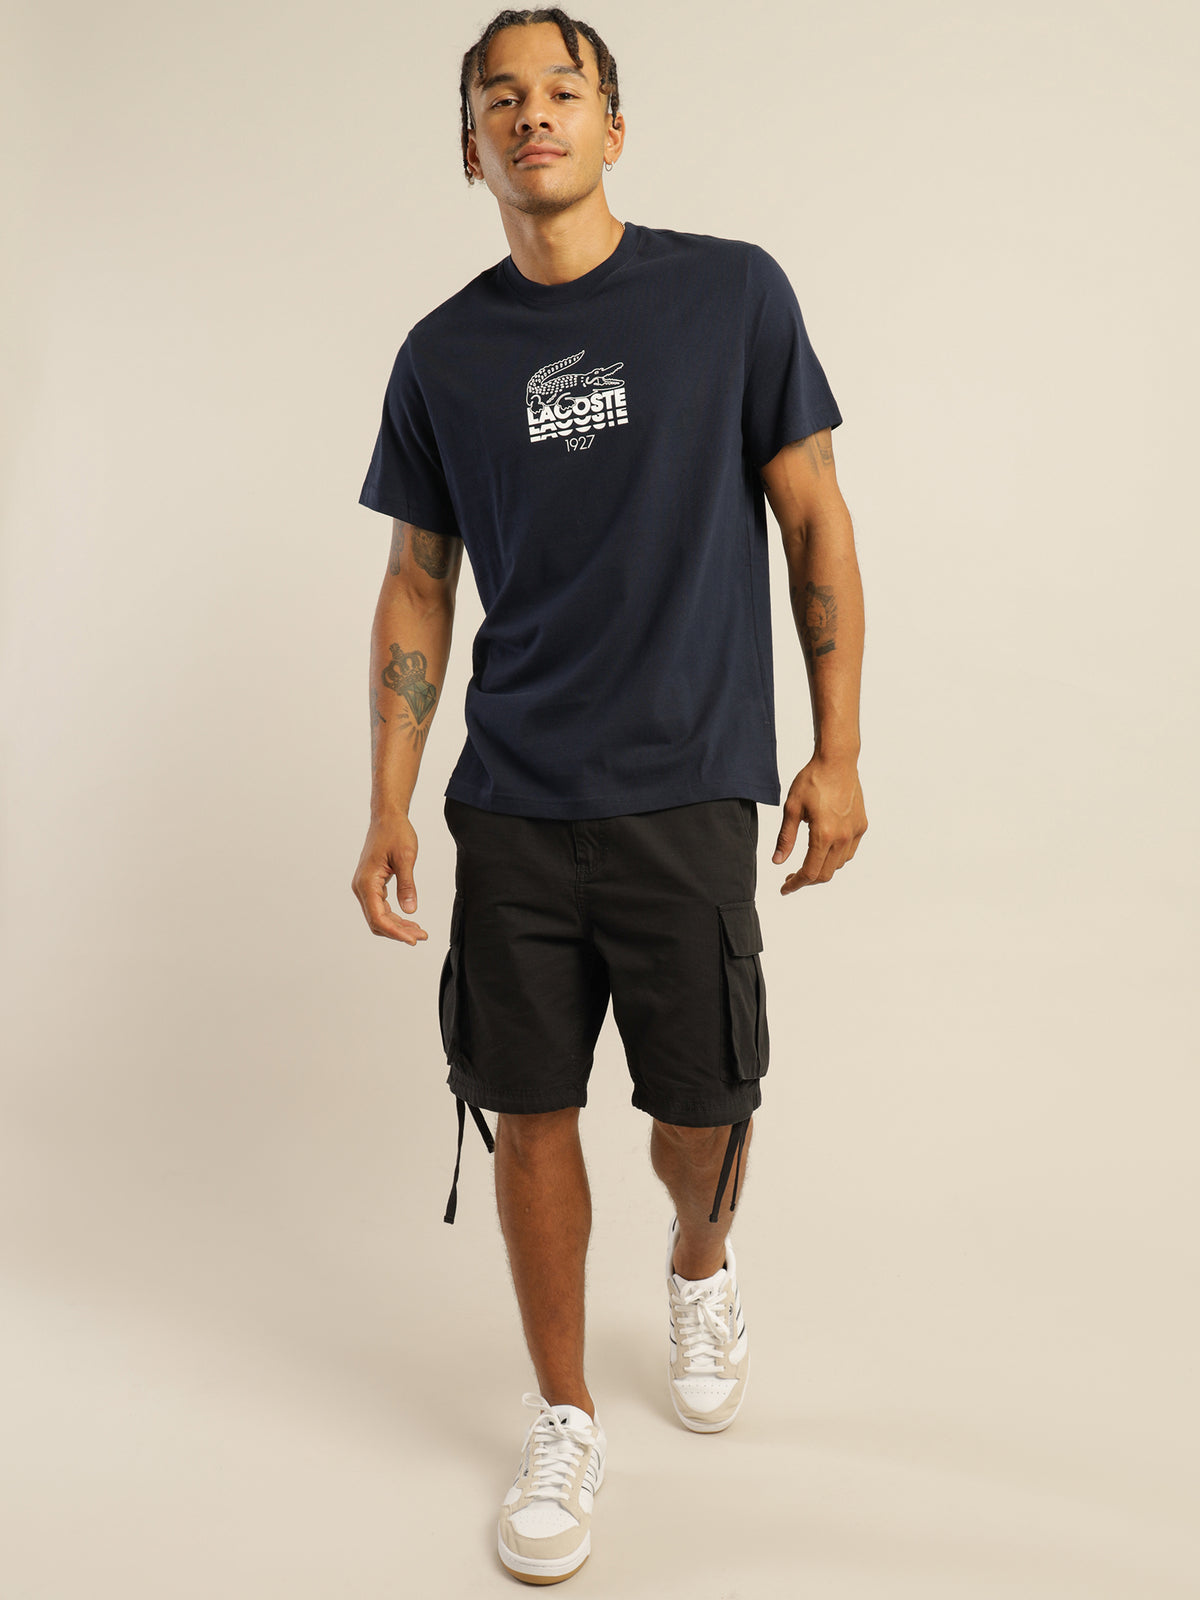 Lifestyle Logo Croc T-Shirt in Navy Blue